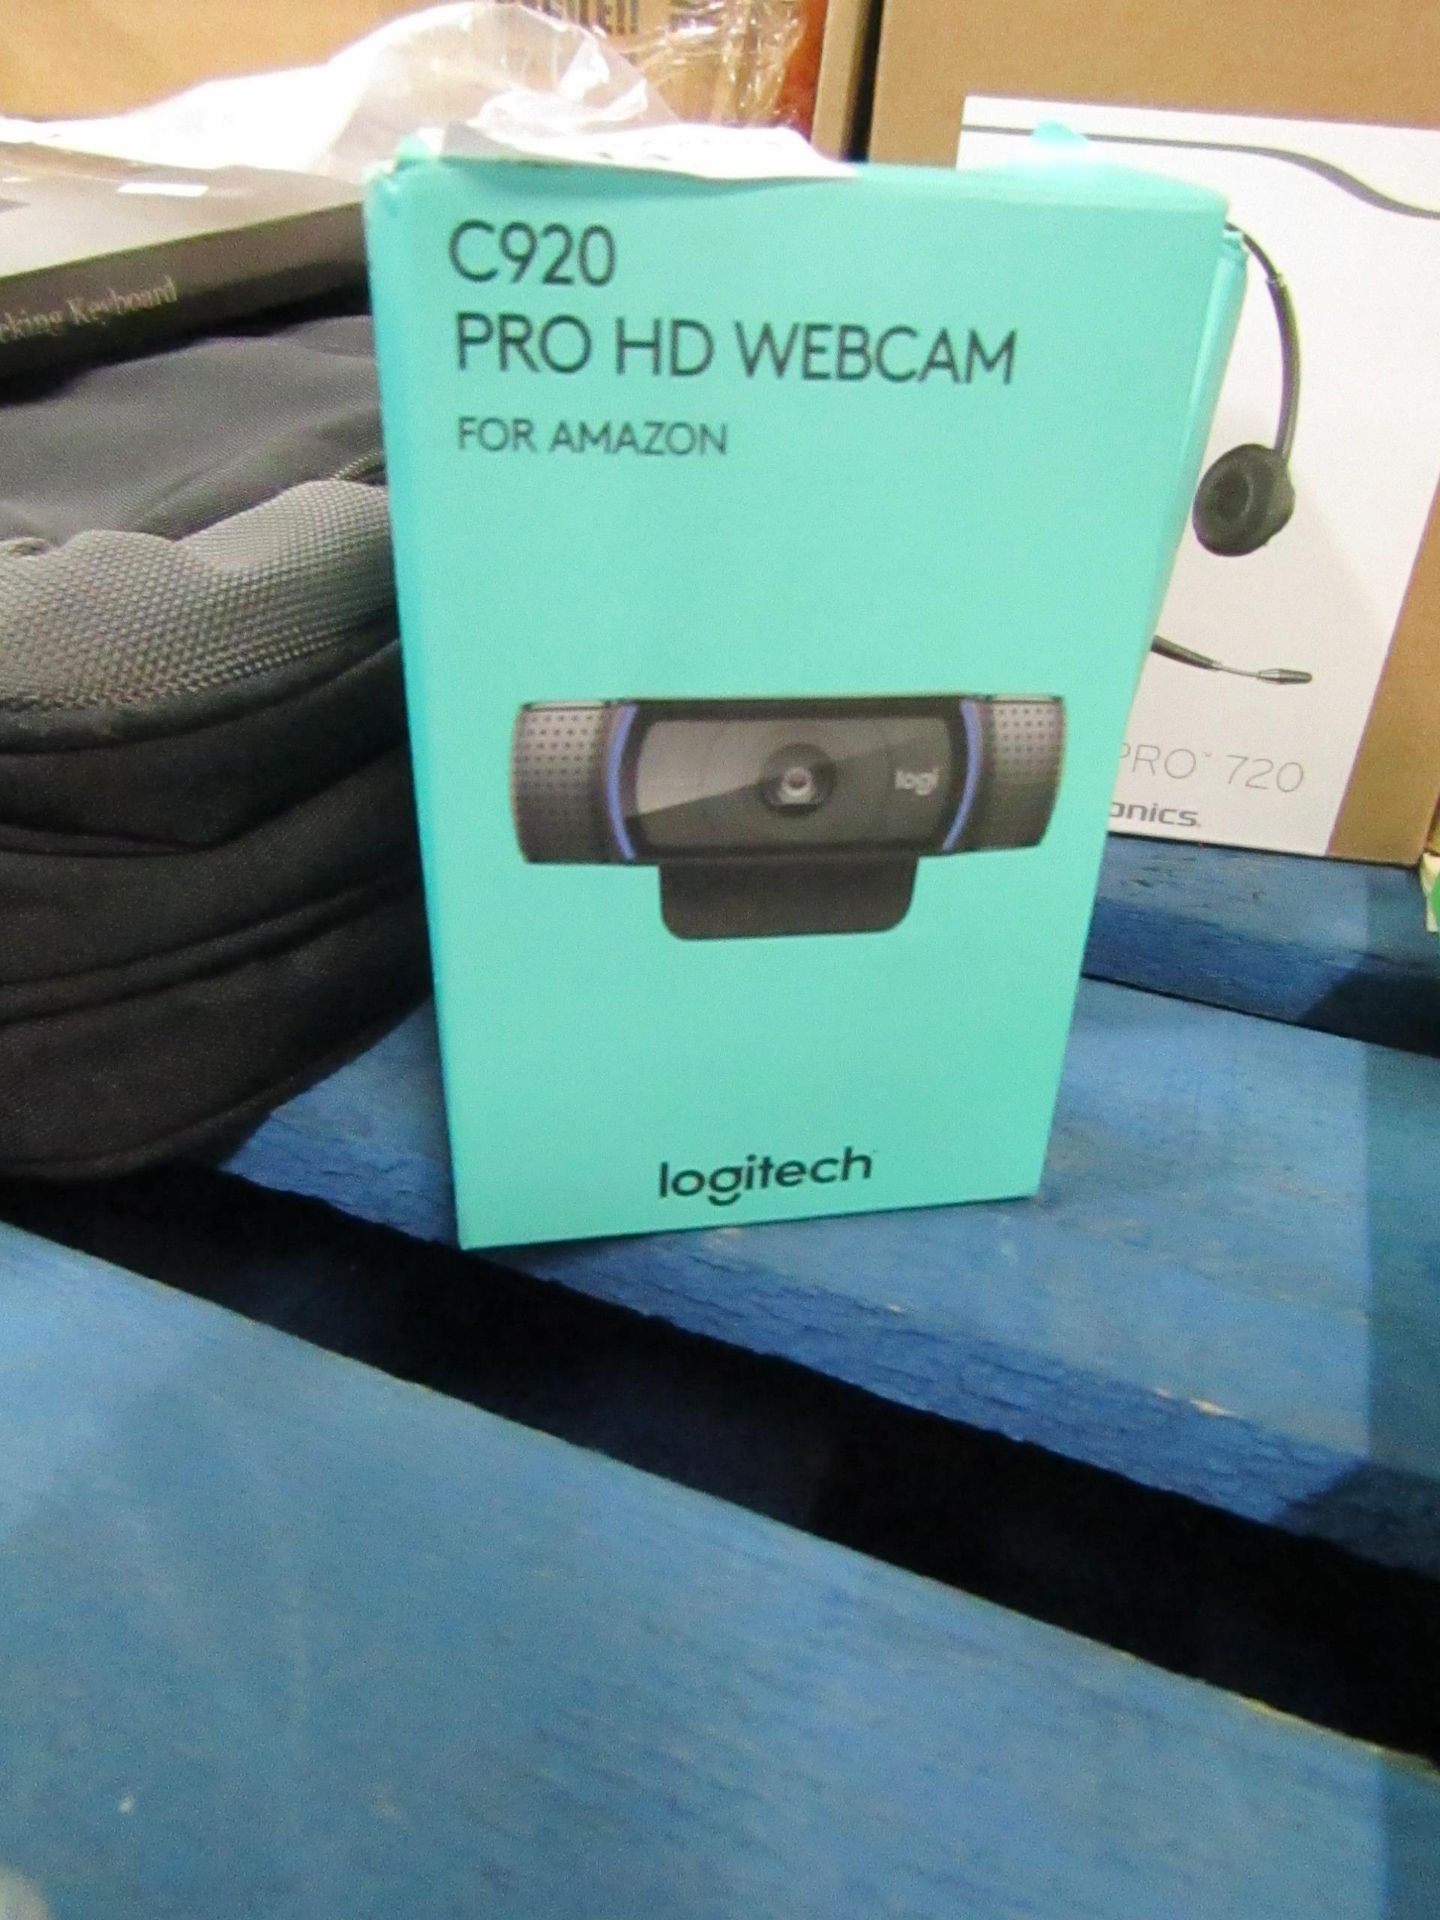 Logitech C920 Pro HD Webcam boxed unchecked